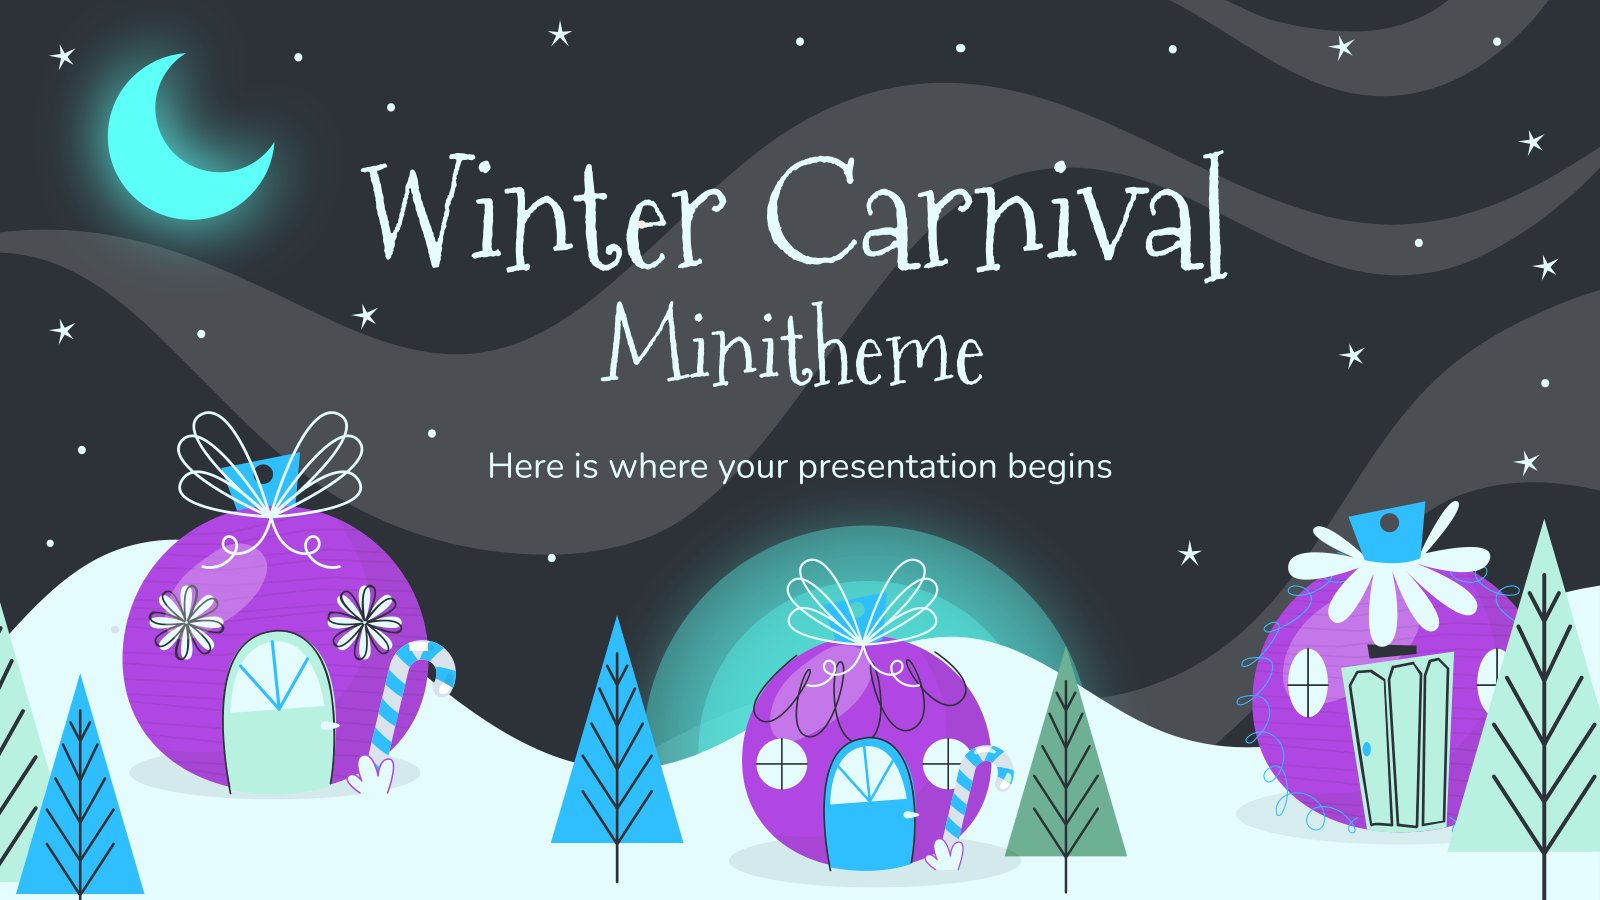 Winter Carnival Minitheme presentation template 